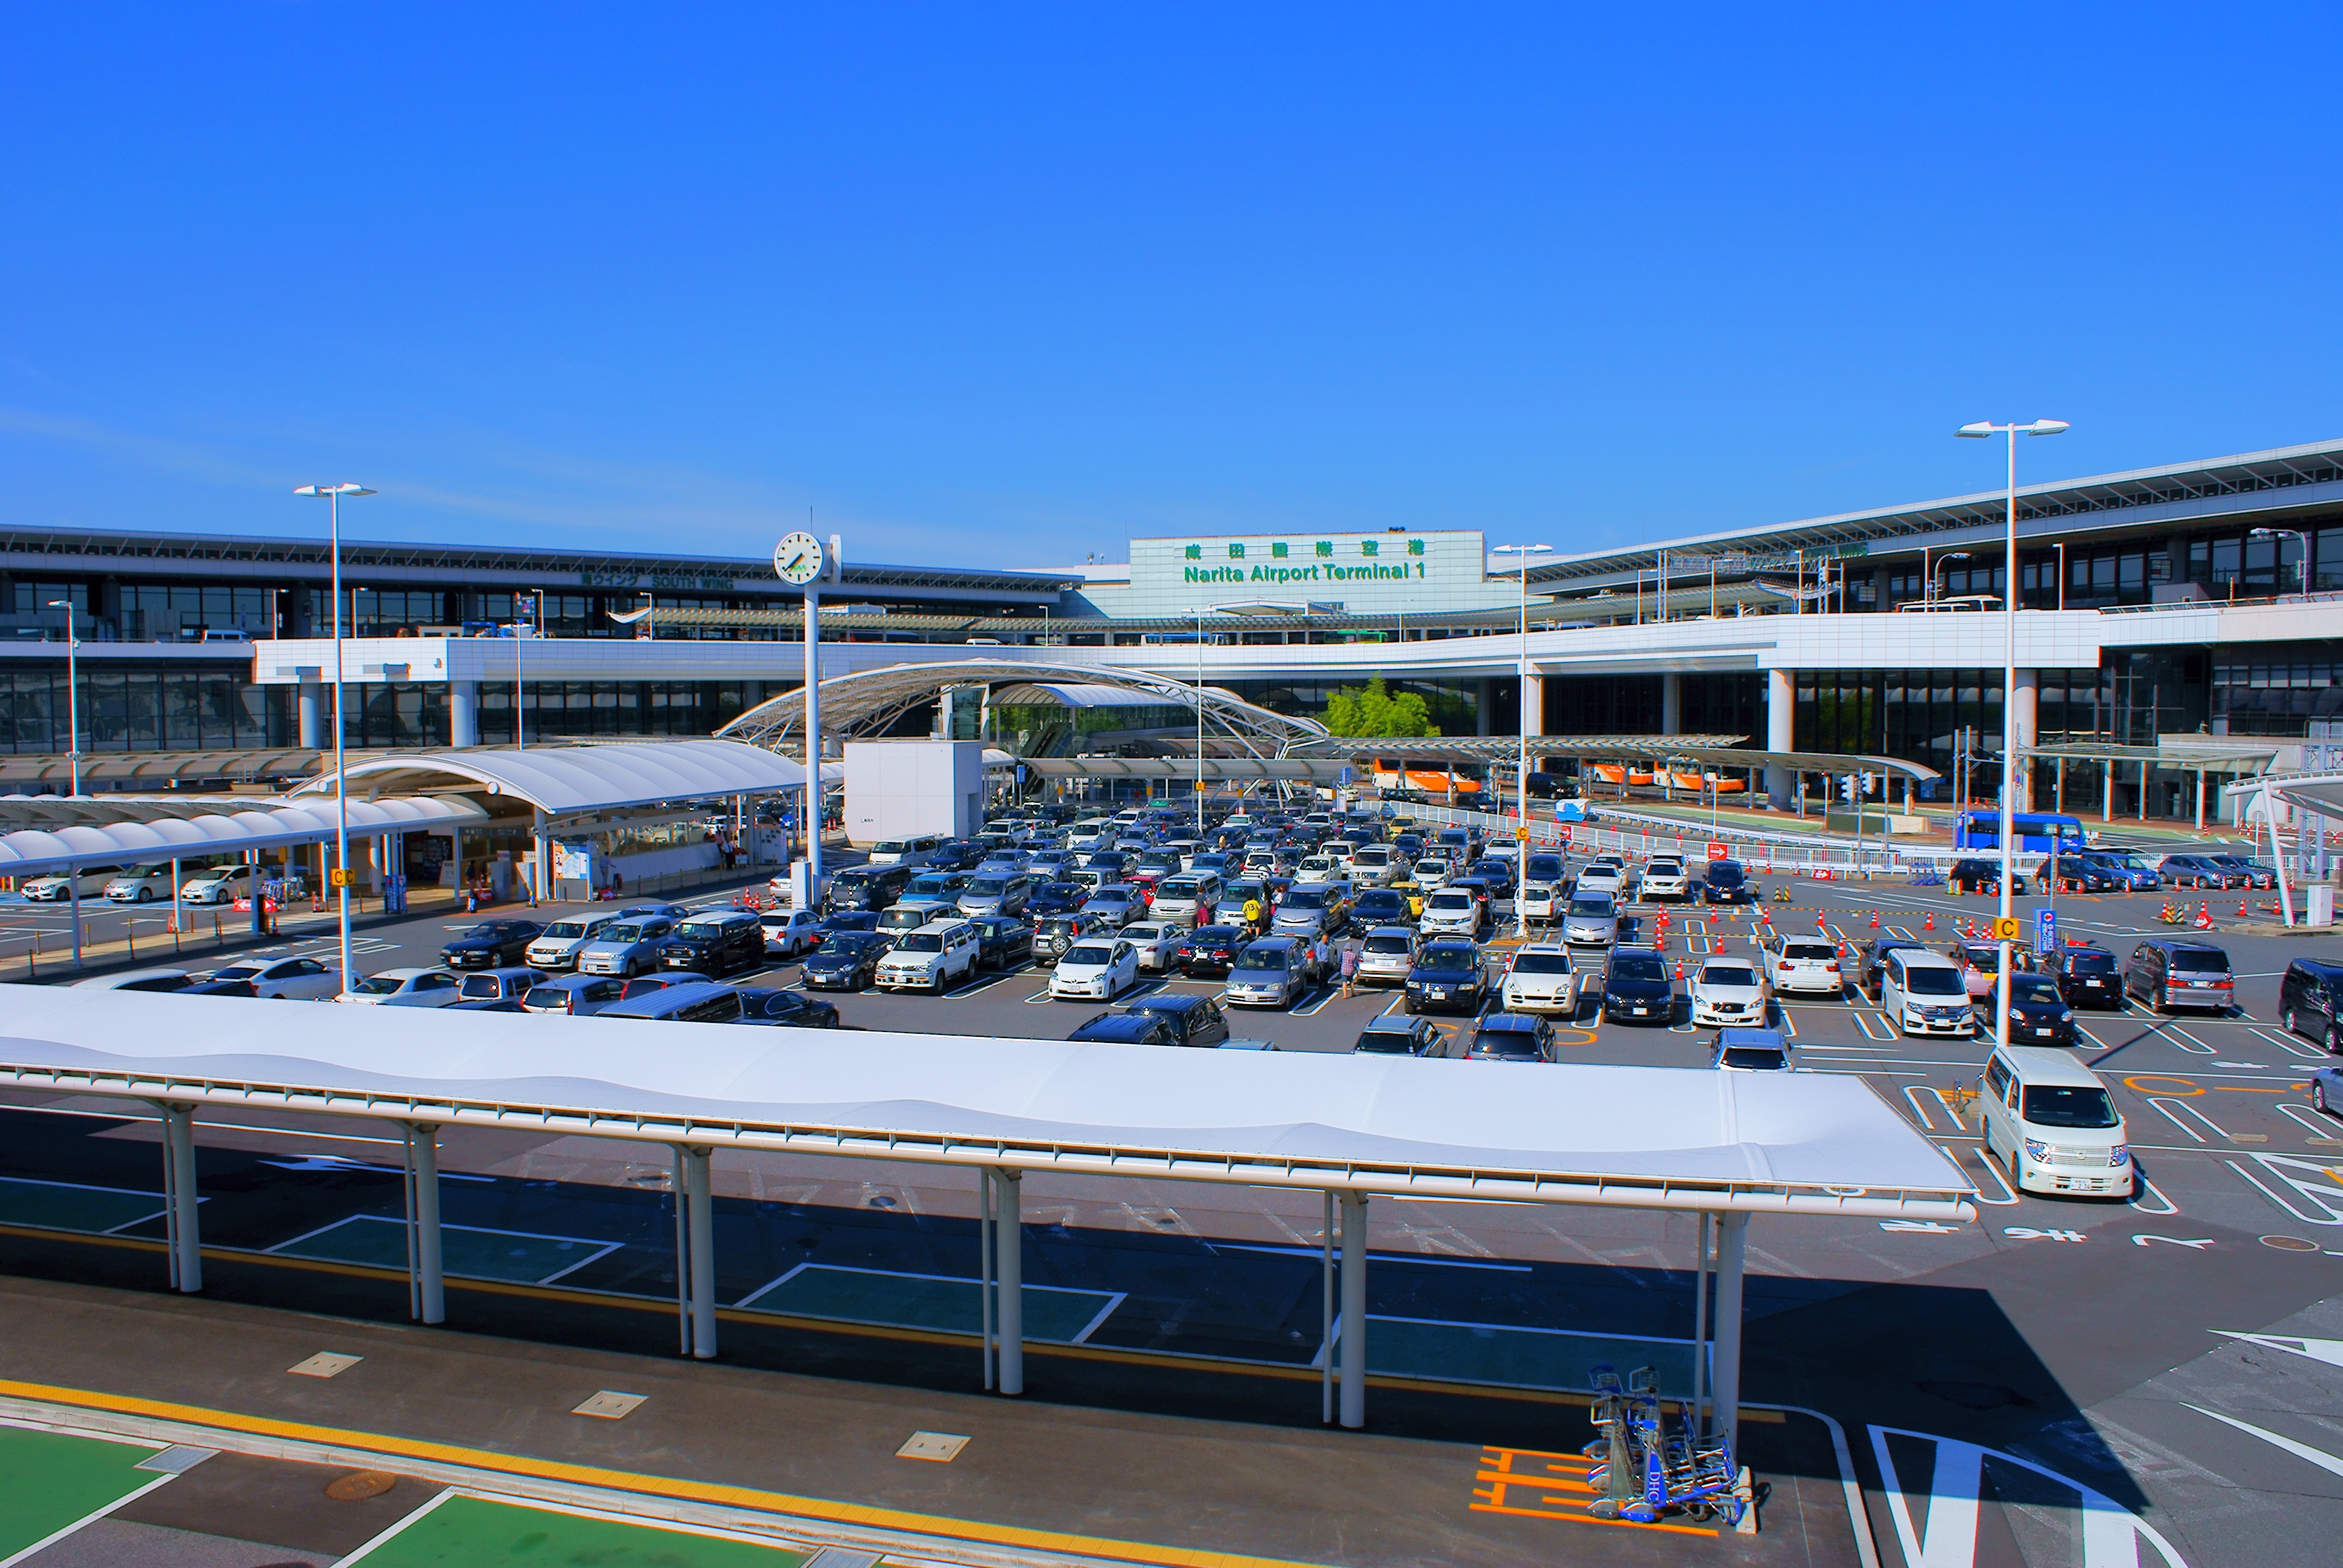 Аэропорт в токио